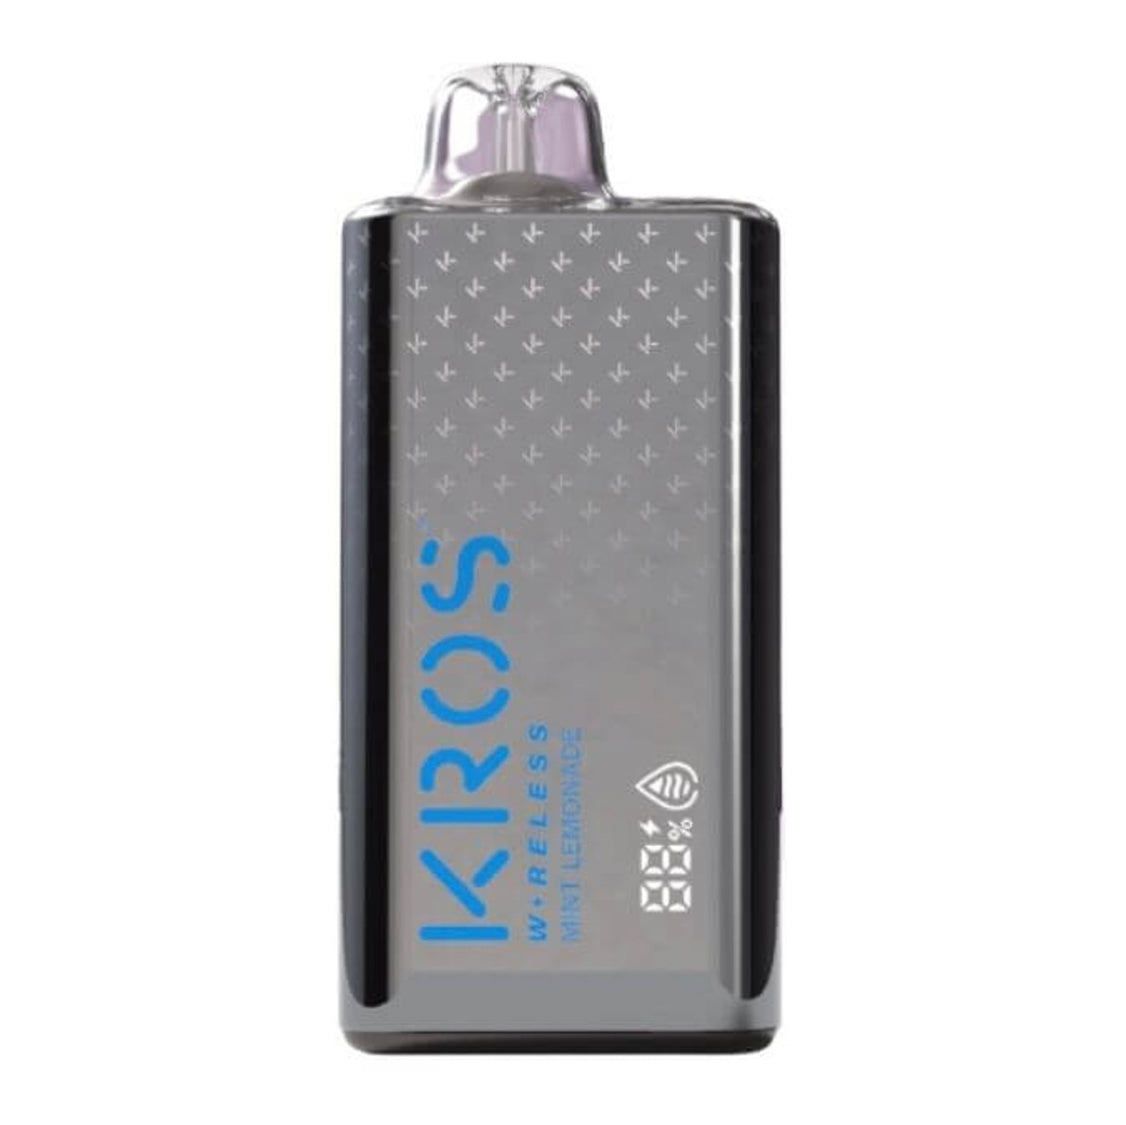 Kros Wireless